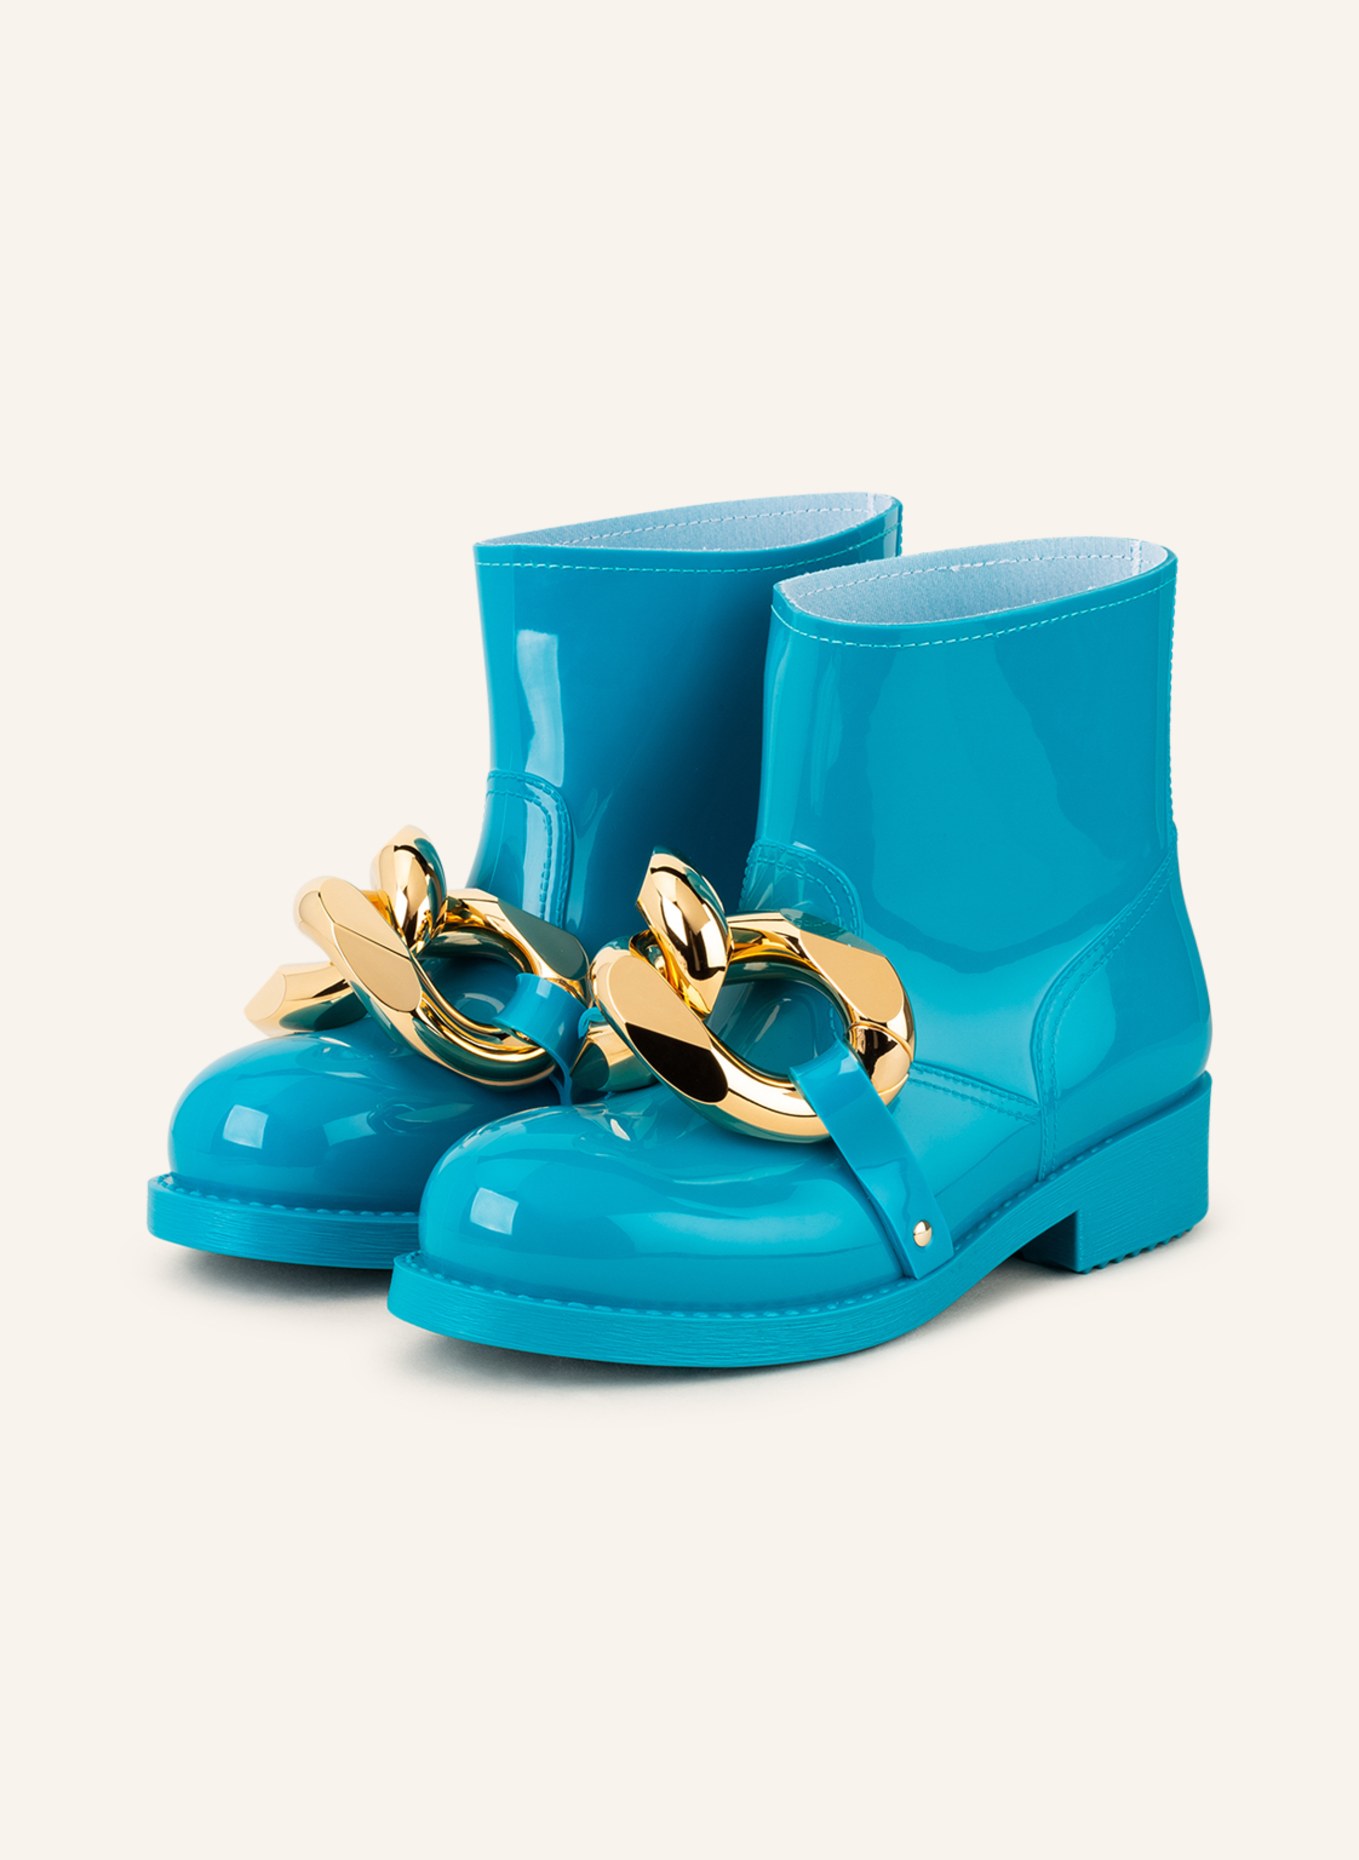 JW ANDERSON Gummi-Boots CHAIN, Farbe: NEONBLAU (Bild 1)